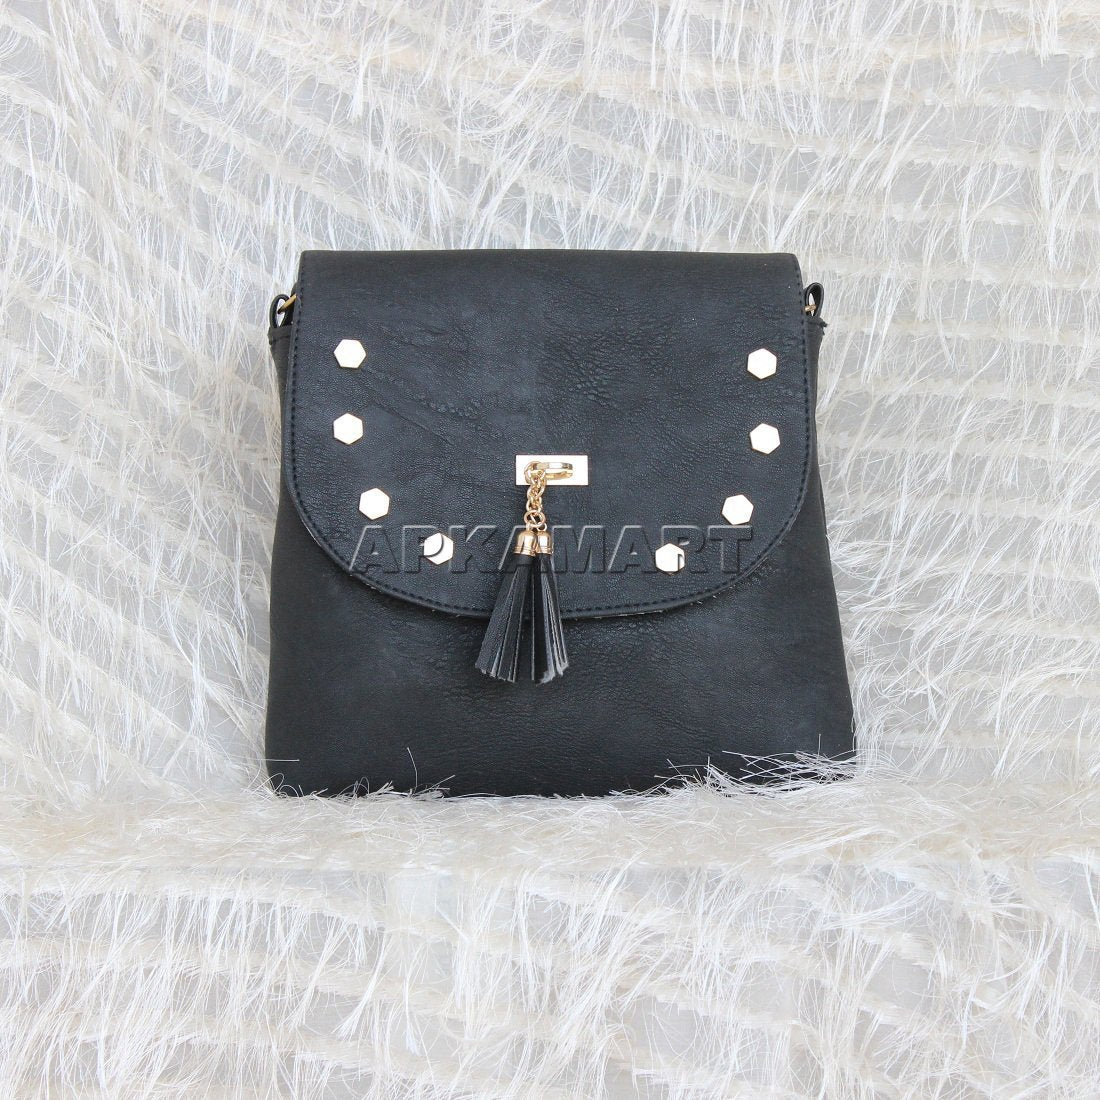 Stylish Black Sling Bag - Handbags for Women - ApkaMart